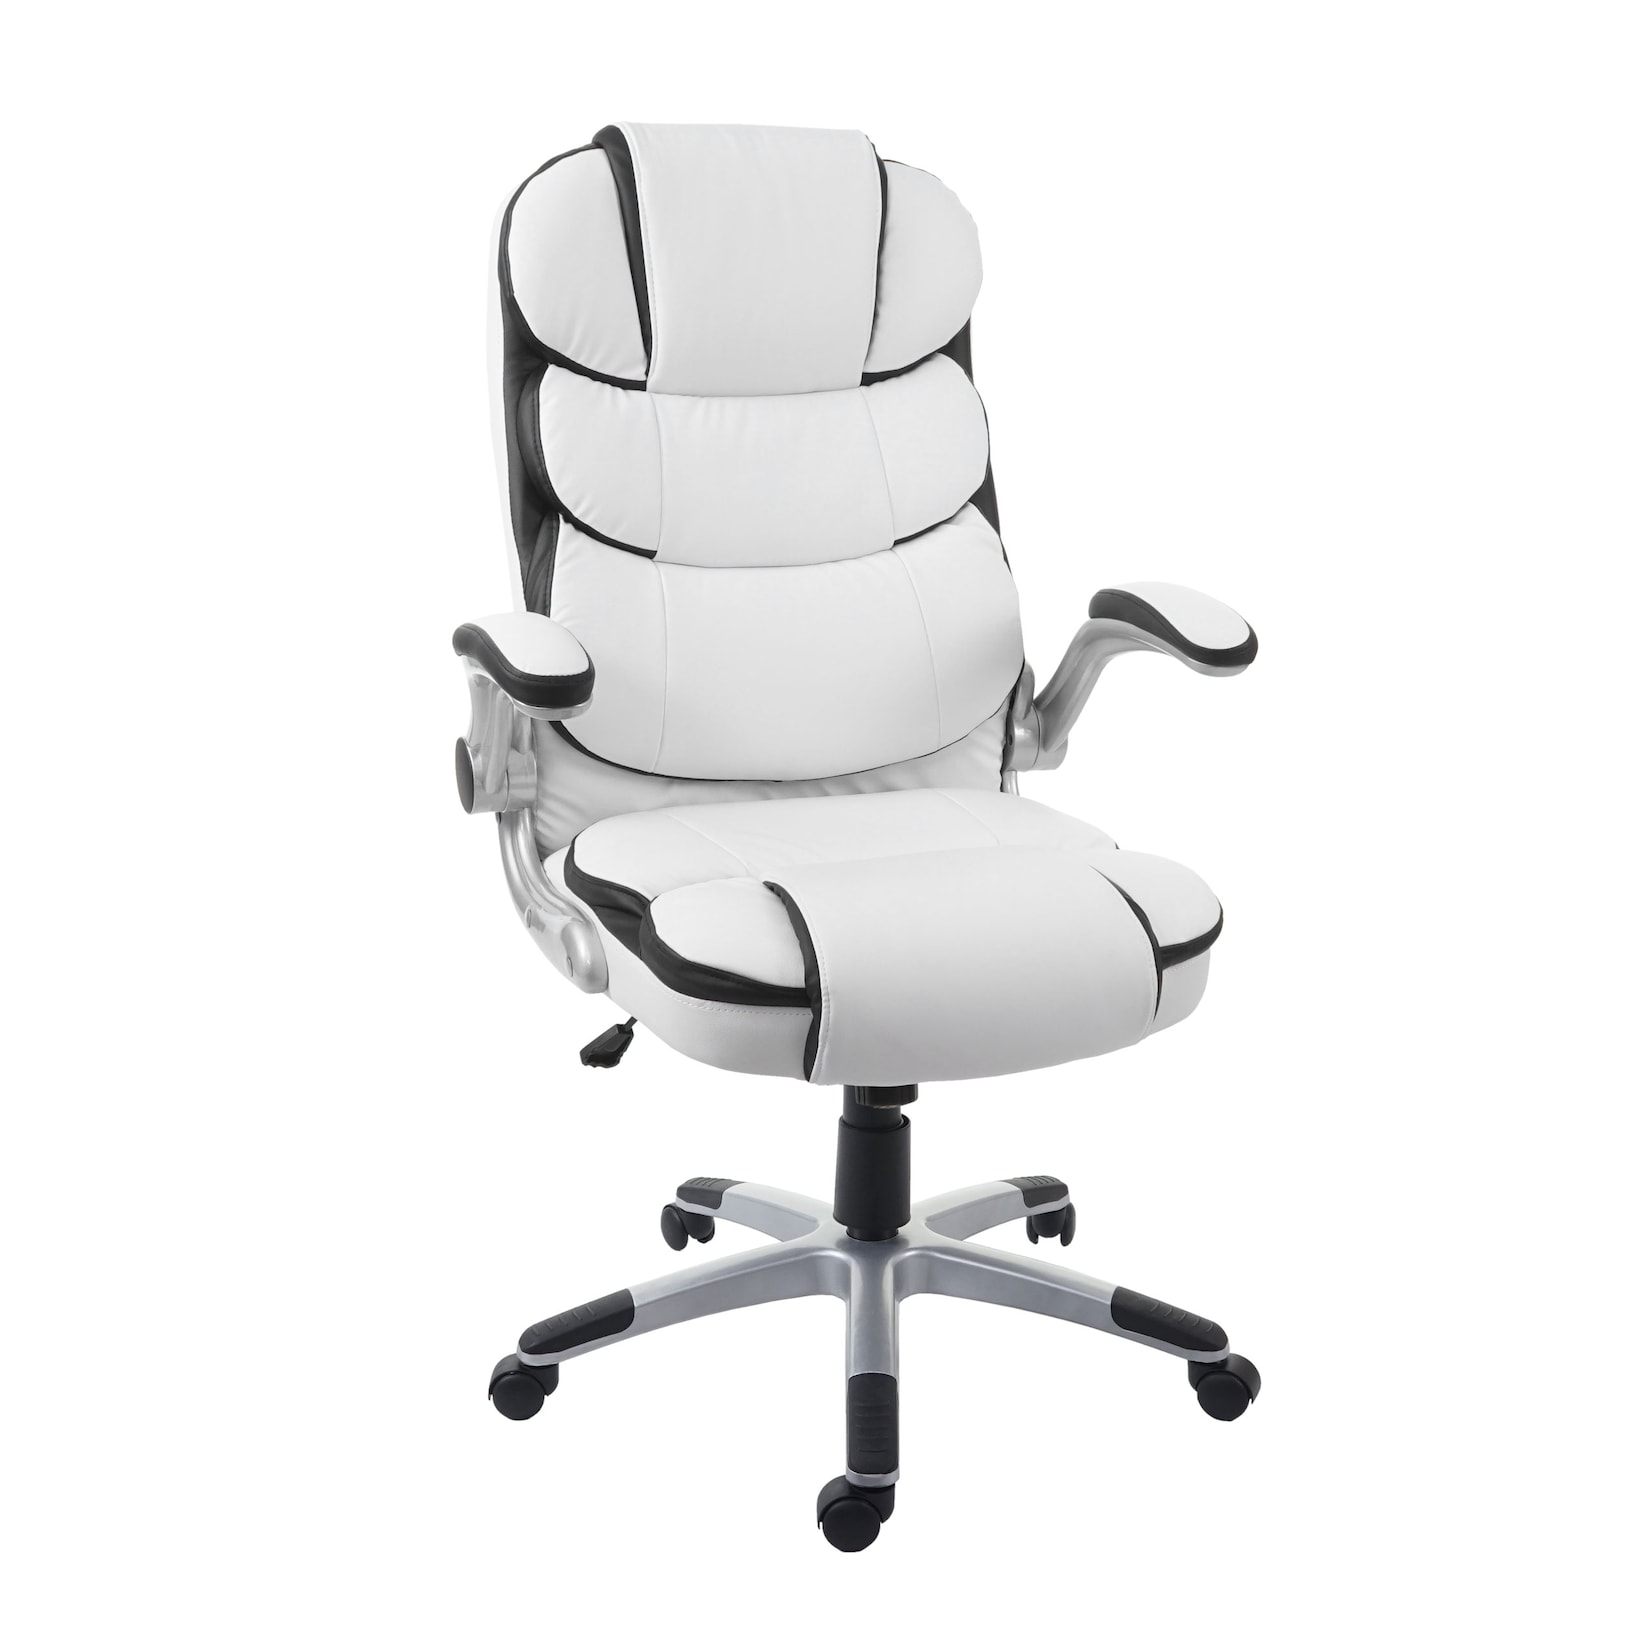 MCW Bürostuhl -F80, Schreibtischstuhl Chefsessel Drehstuhl, Kunstleder ~ weiß